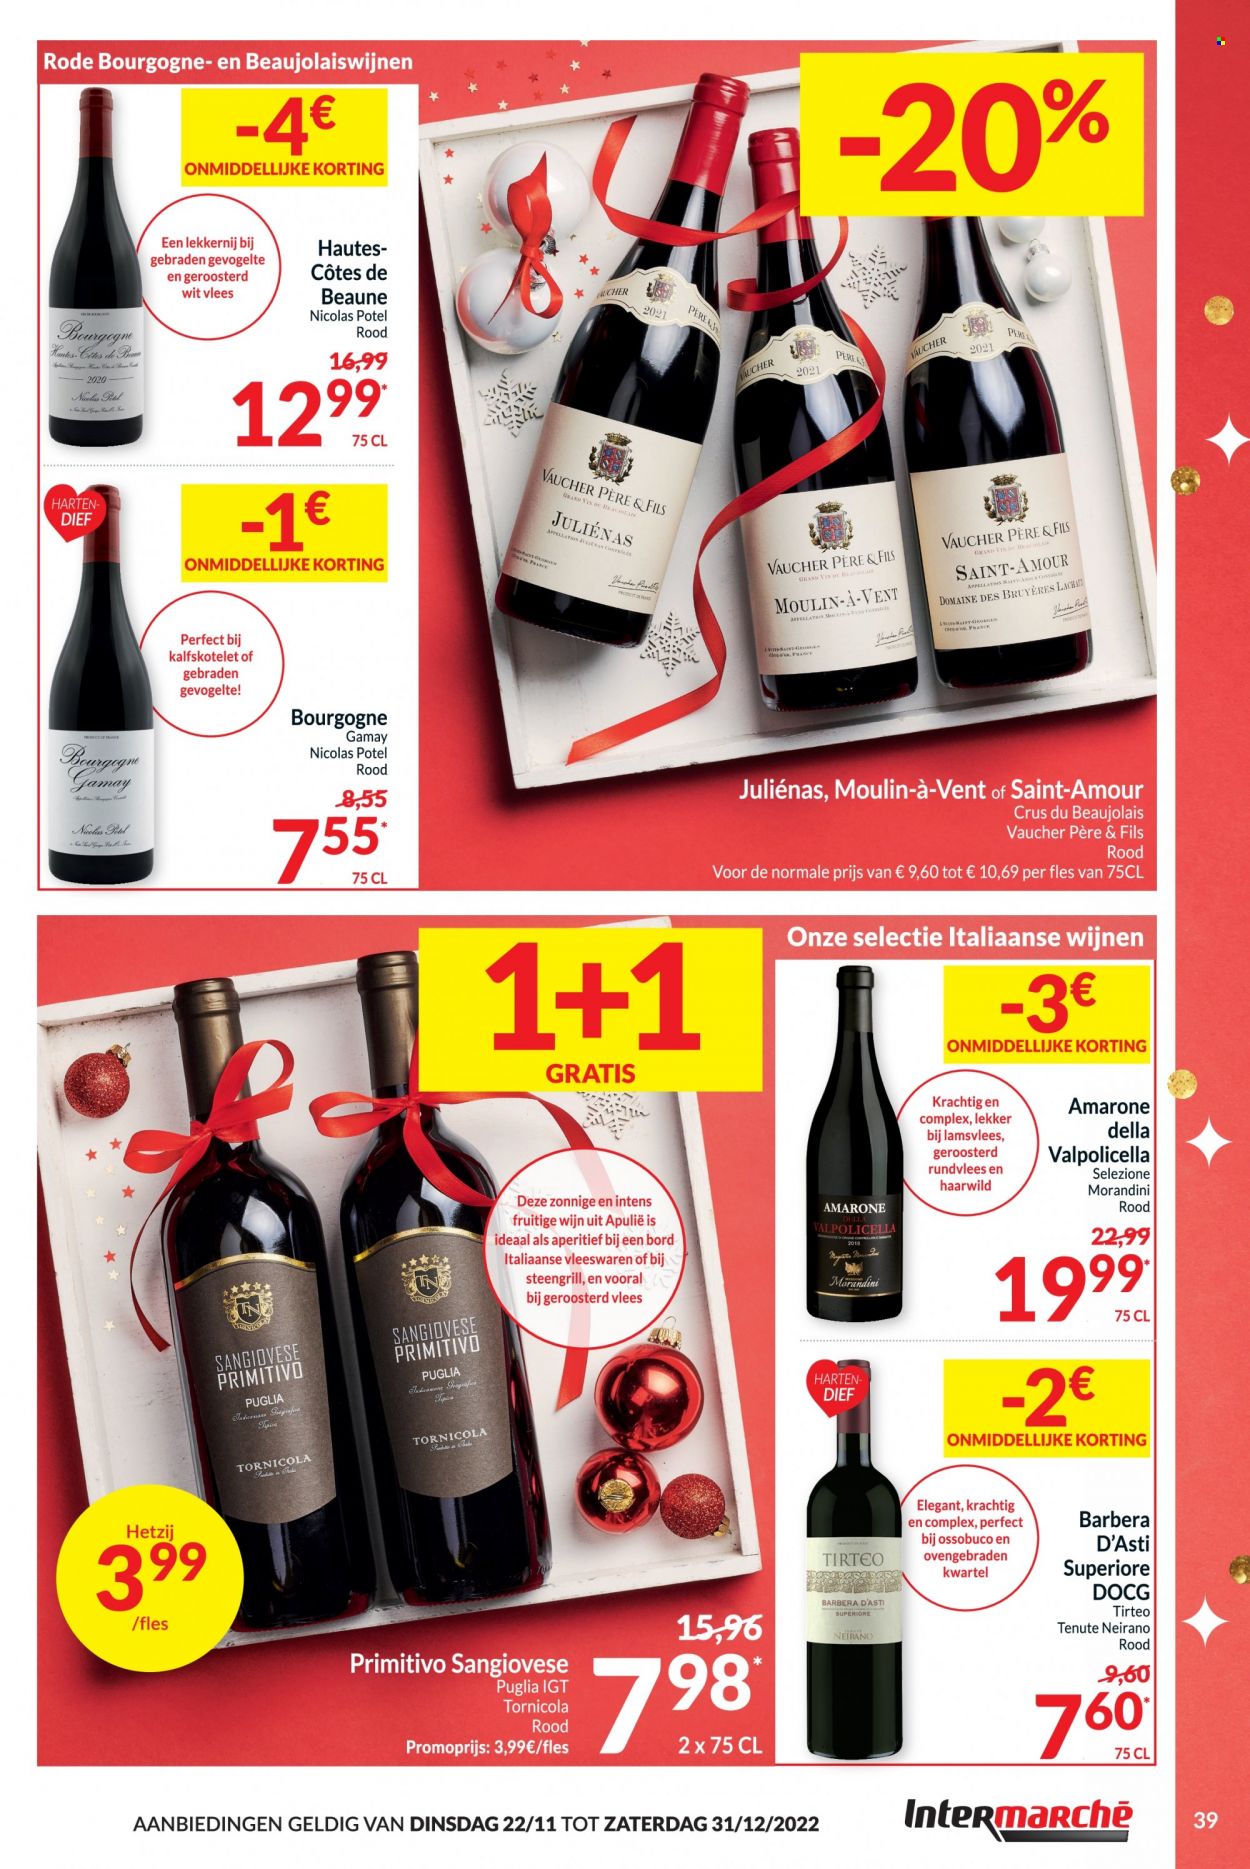 thumbnail - Intermarché-aanbieding - 22/11/2022 - 31/12/2022 -  producten in de aanbieding - rundvlees, Barbera D'asti, Valpolicella, Amarone della Valpolicella, wijn, Beaujolais. Pagina 39.